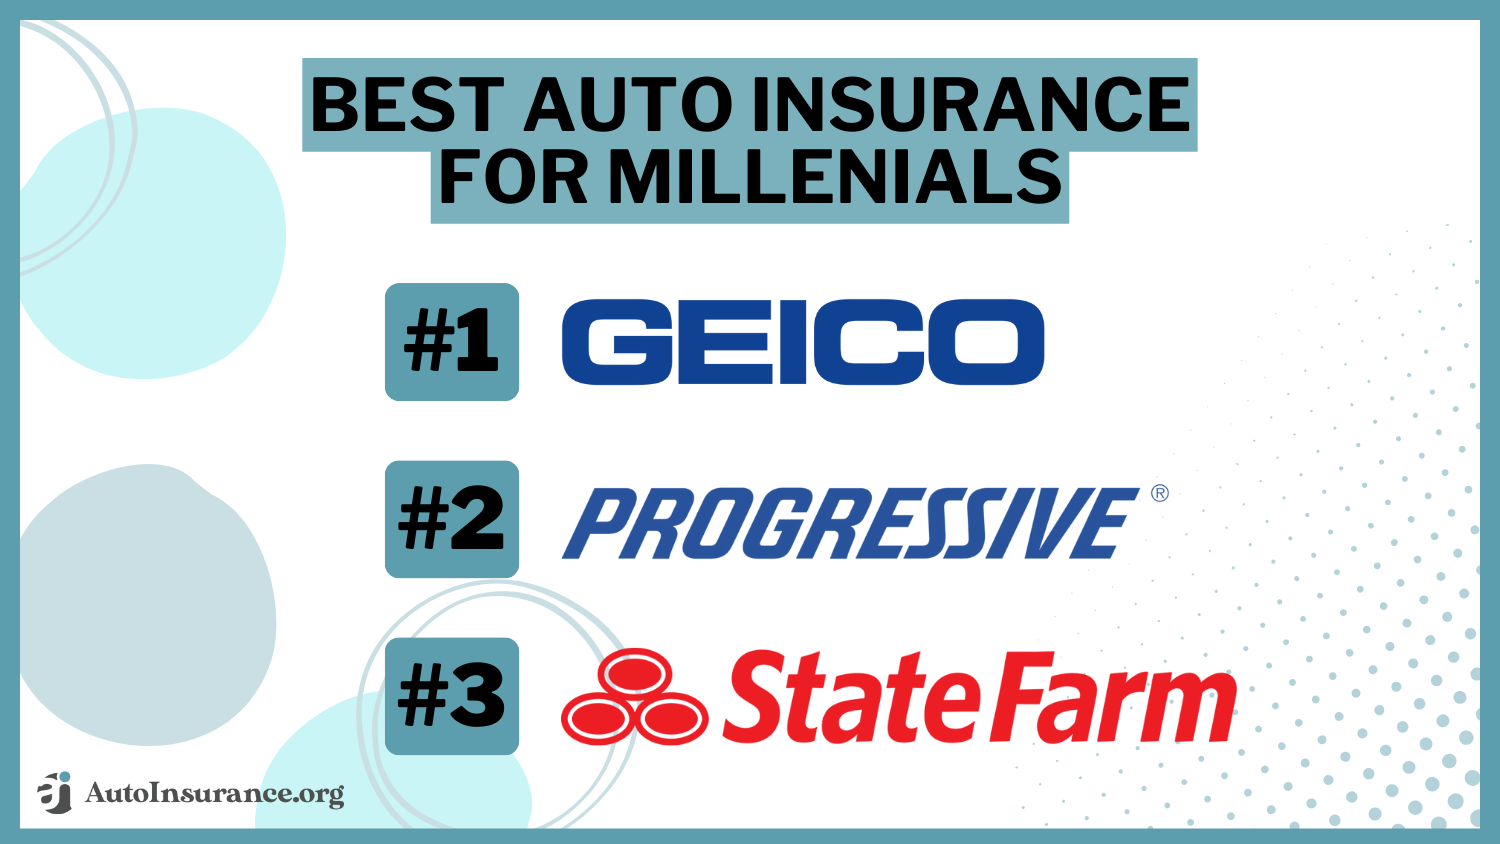 best auto insurance for millennials: Geico, Progressive, State Farm